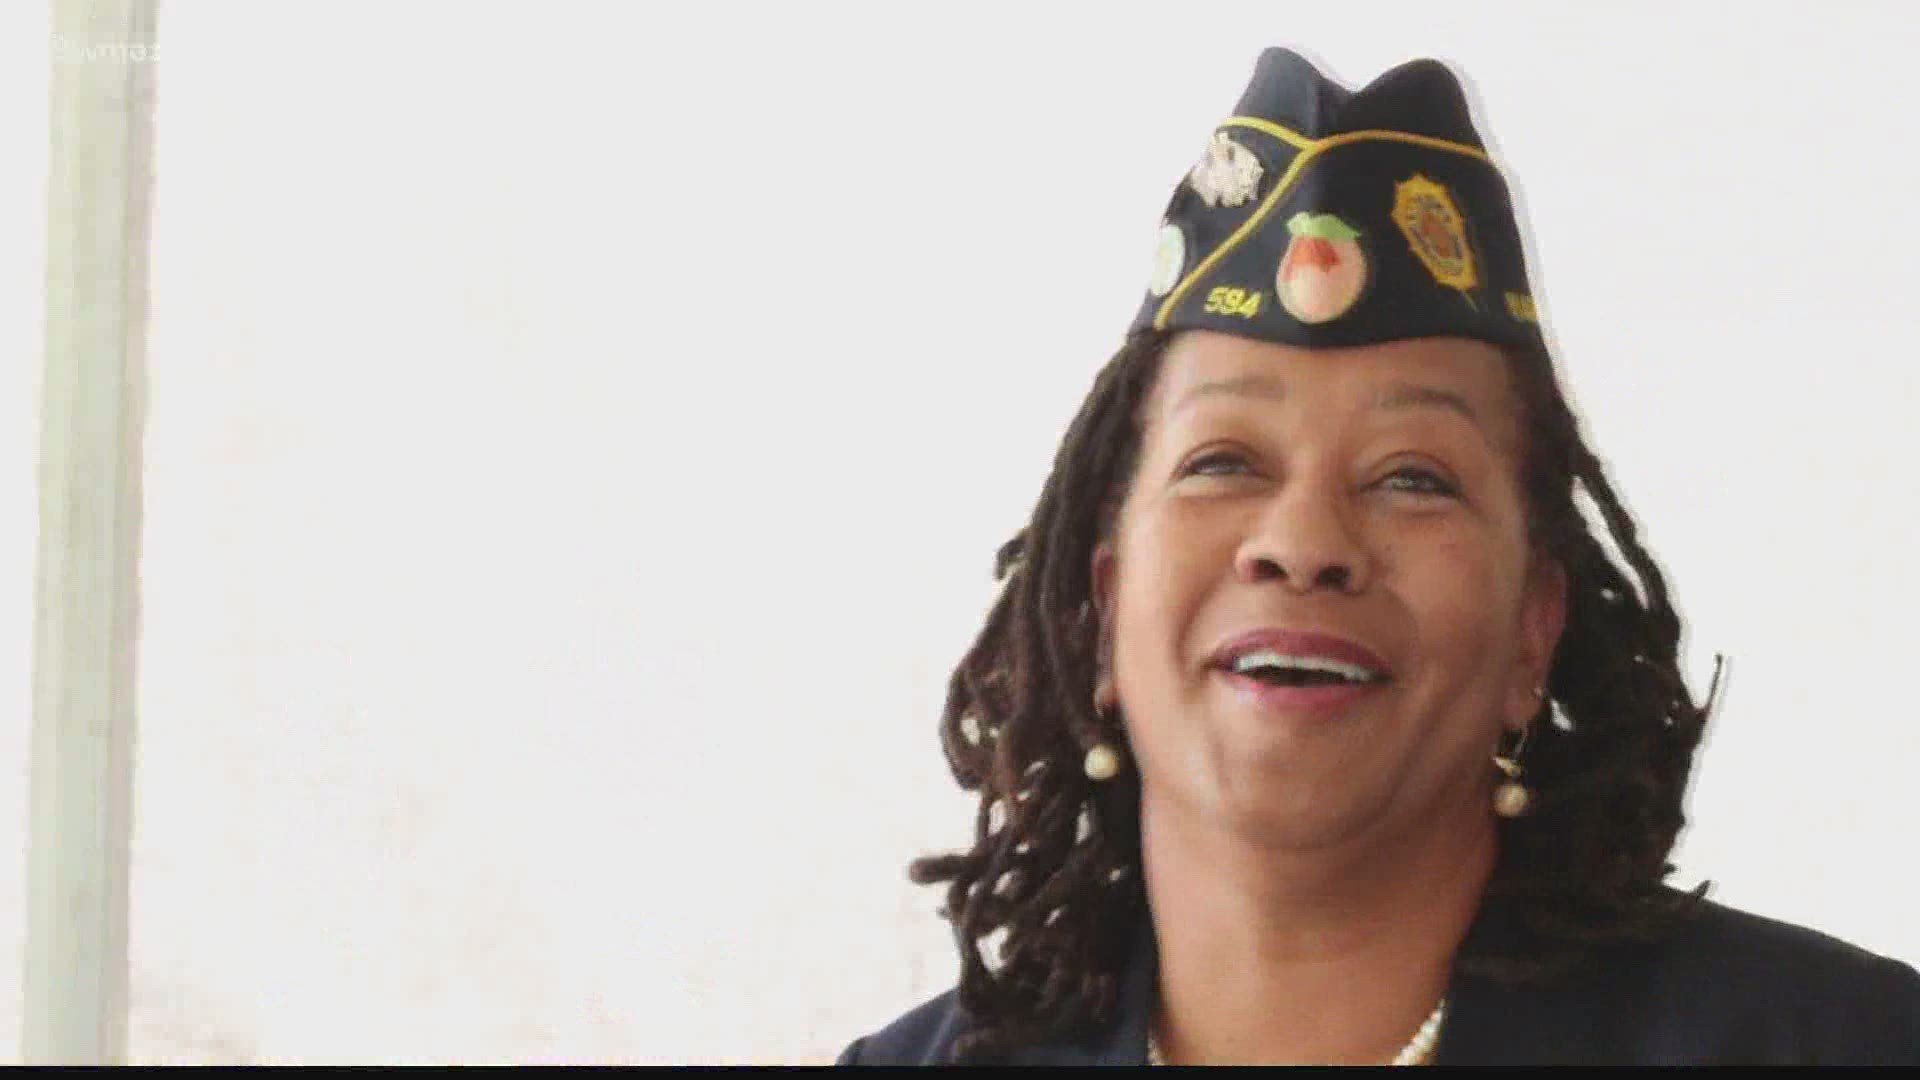 Kaylnn Jacks is the first Black woman commander of the American Legion post in Warner Robins.